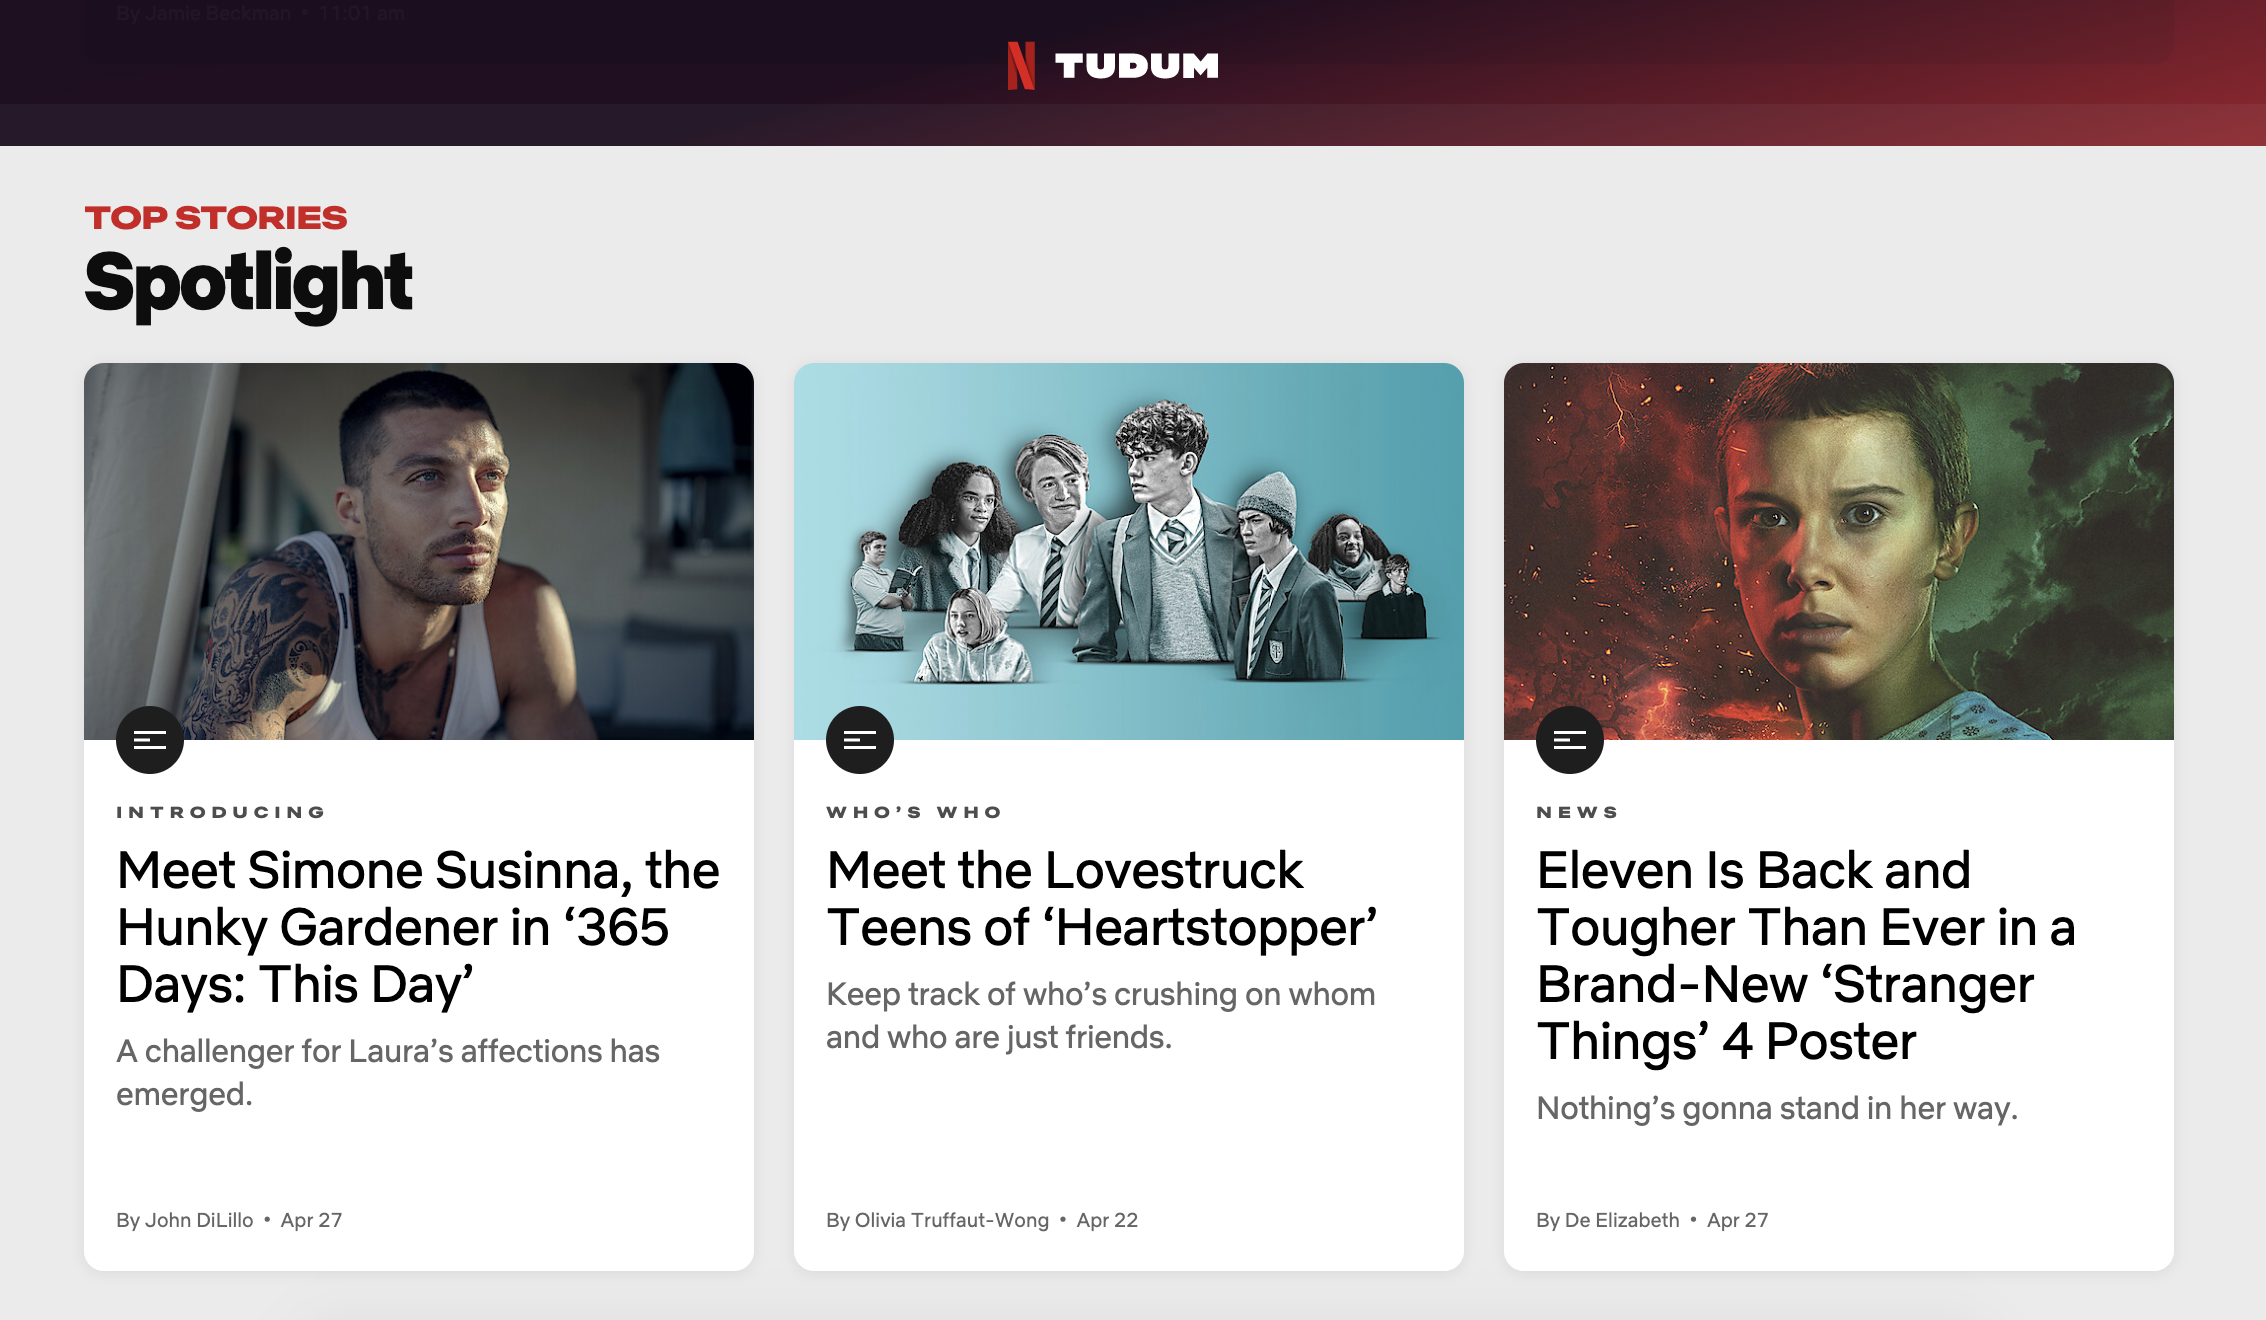 Stories on the Tudum site